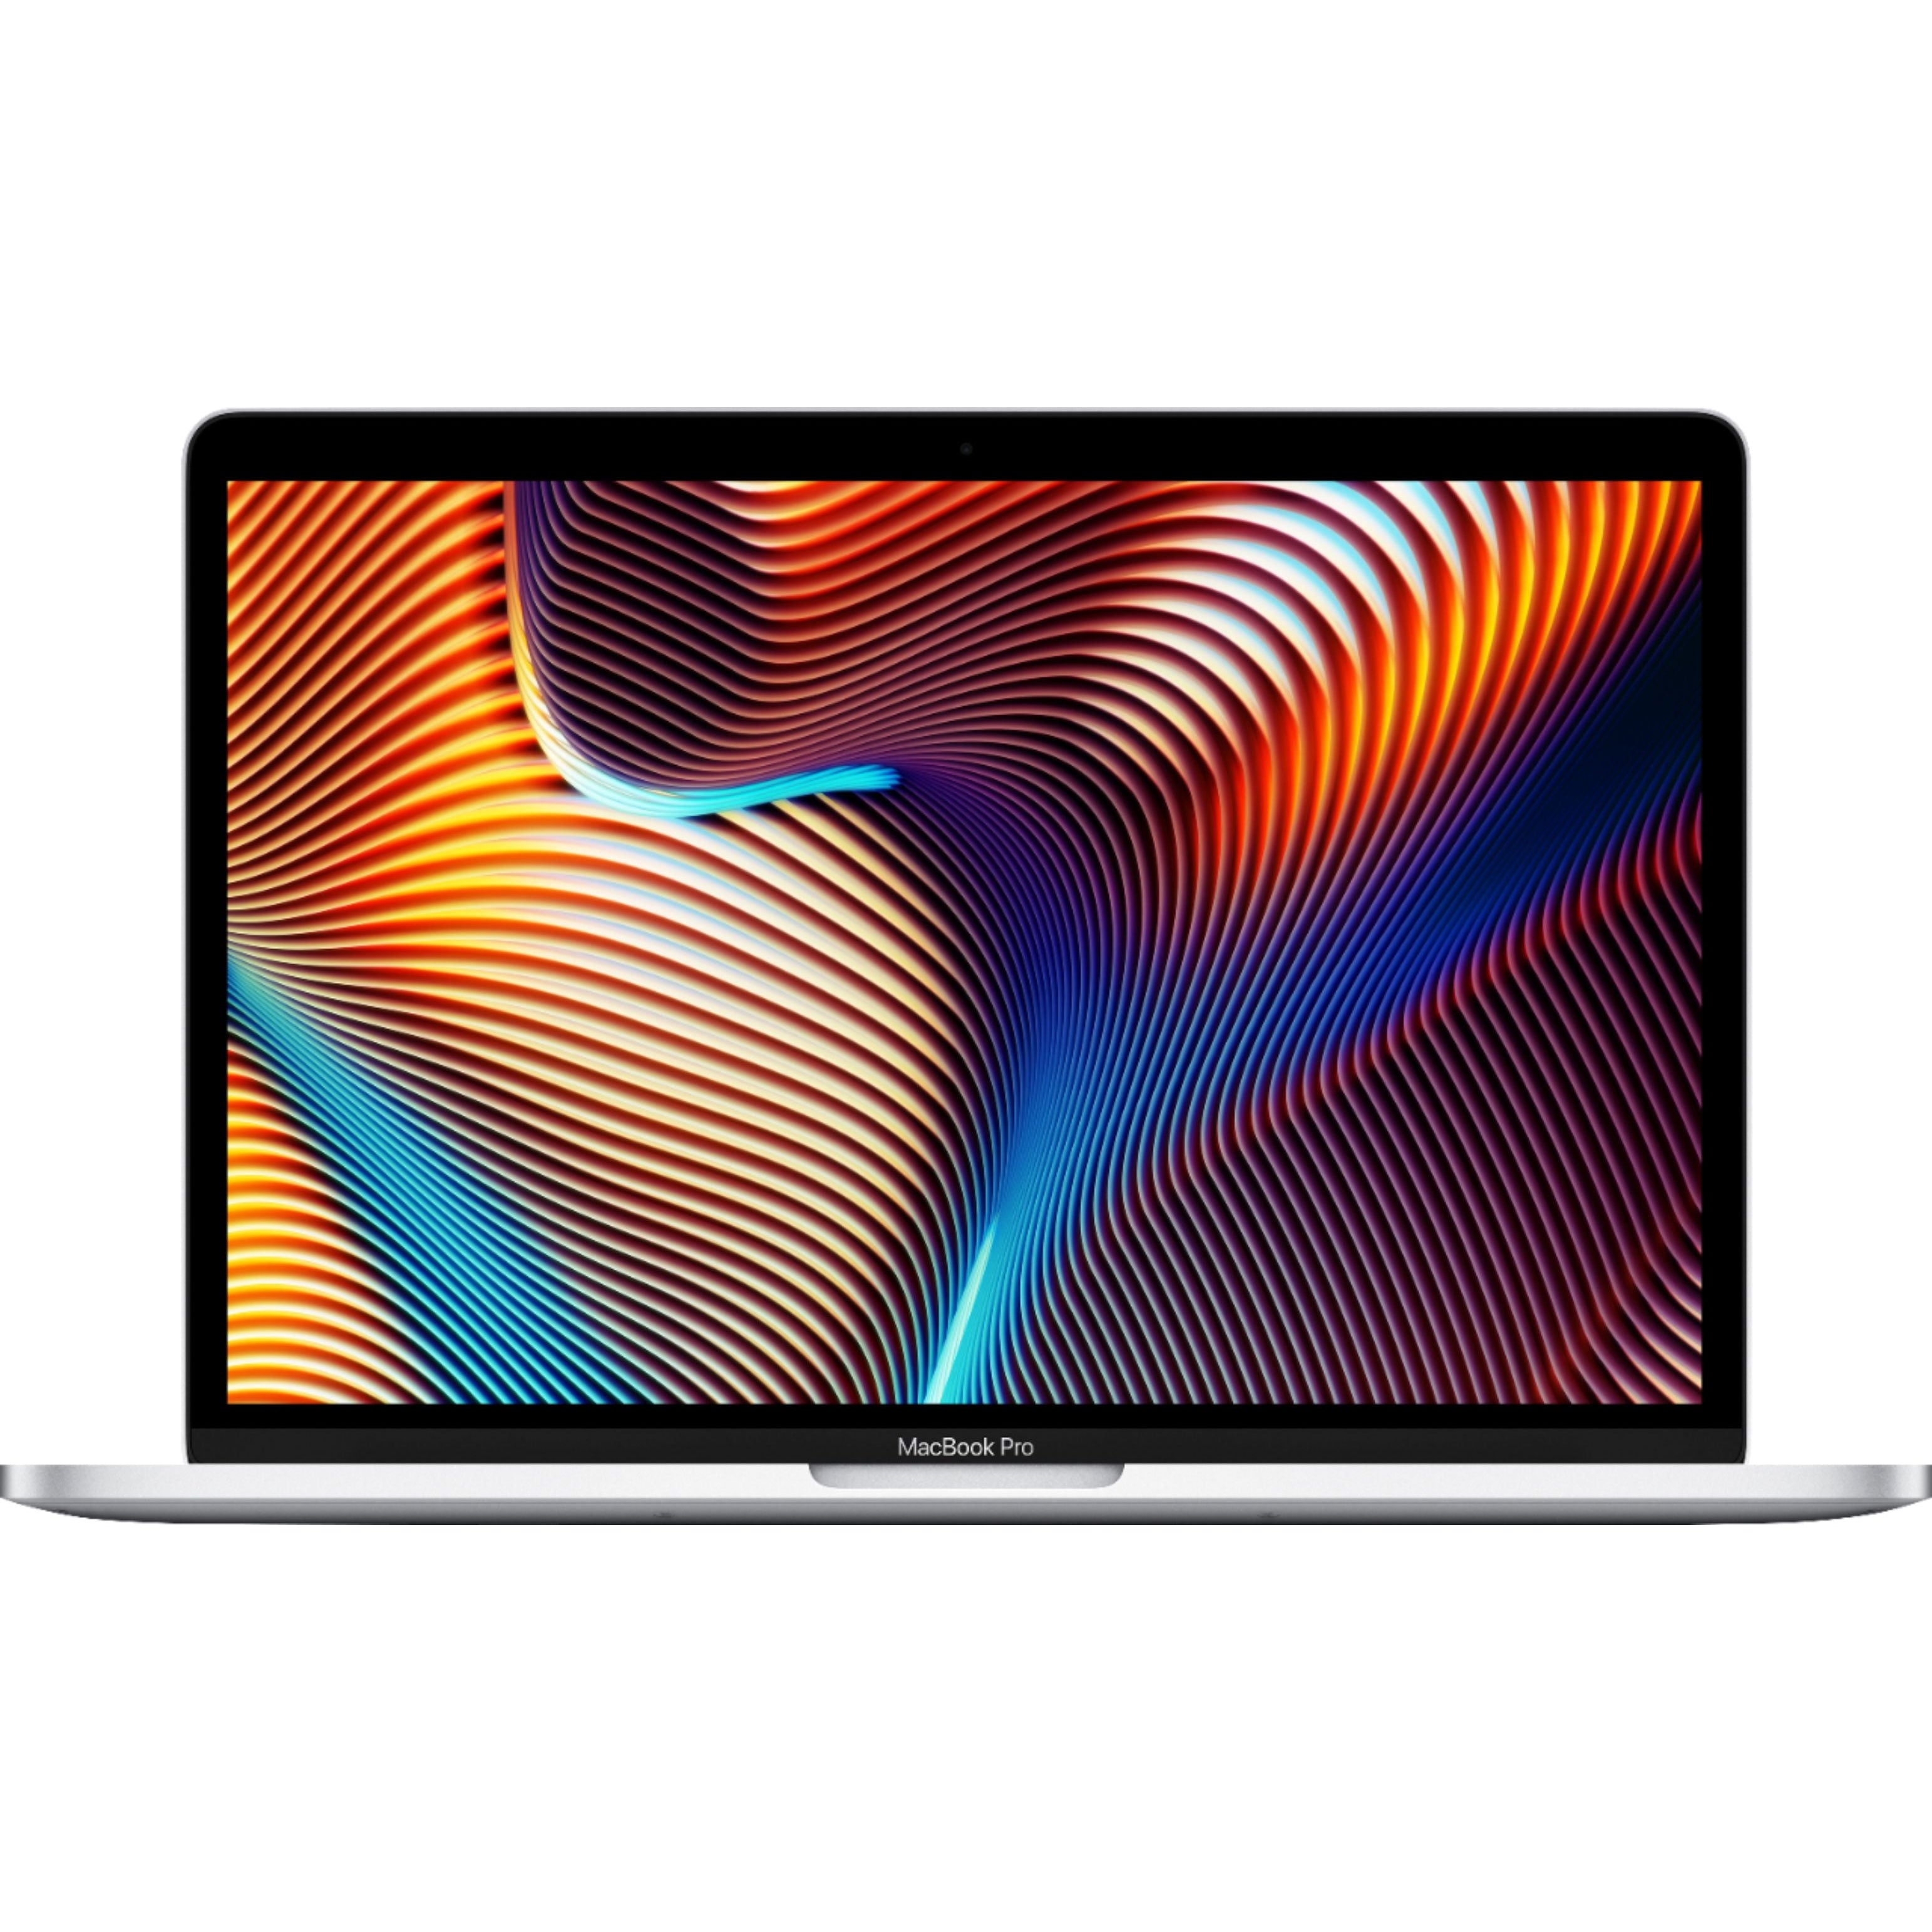 Apple MacBook Pro 13.3'' MV992LL/A (2019) Laptop, Intel Core i5, 8GB RAM, 256GB SSD, Silver with Touch Bar